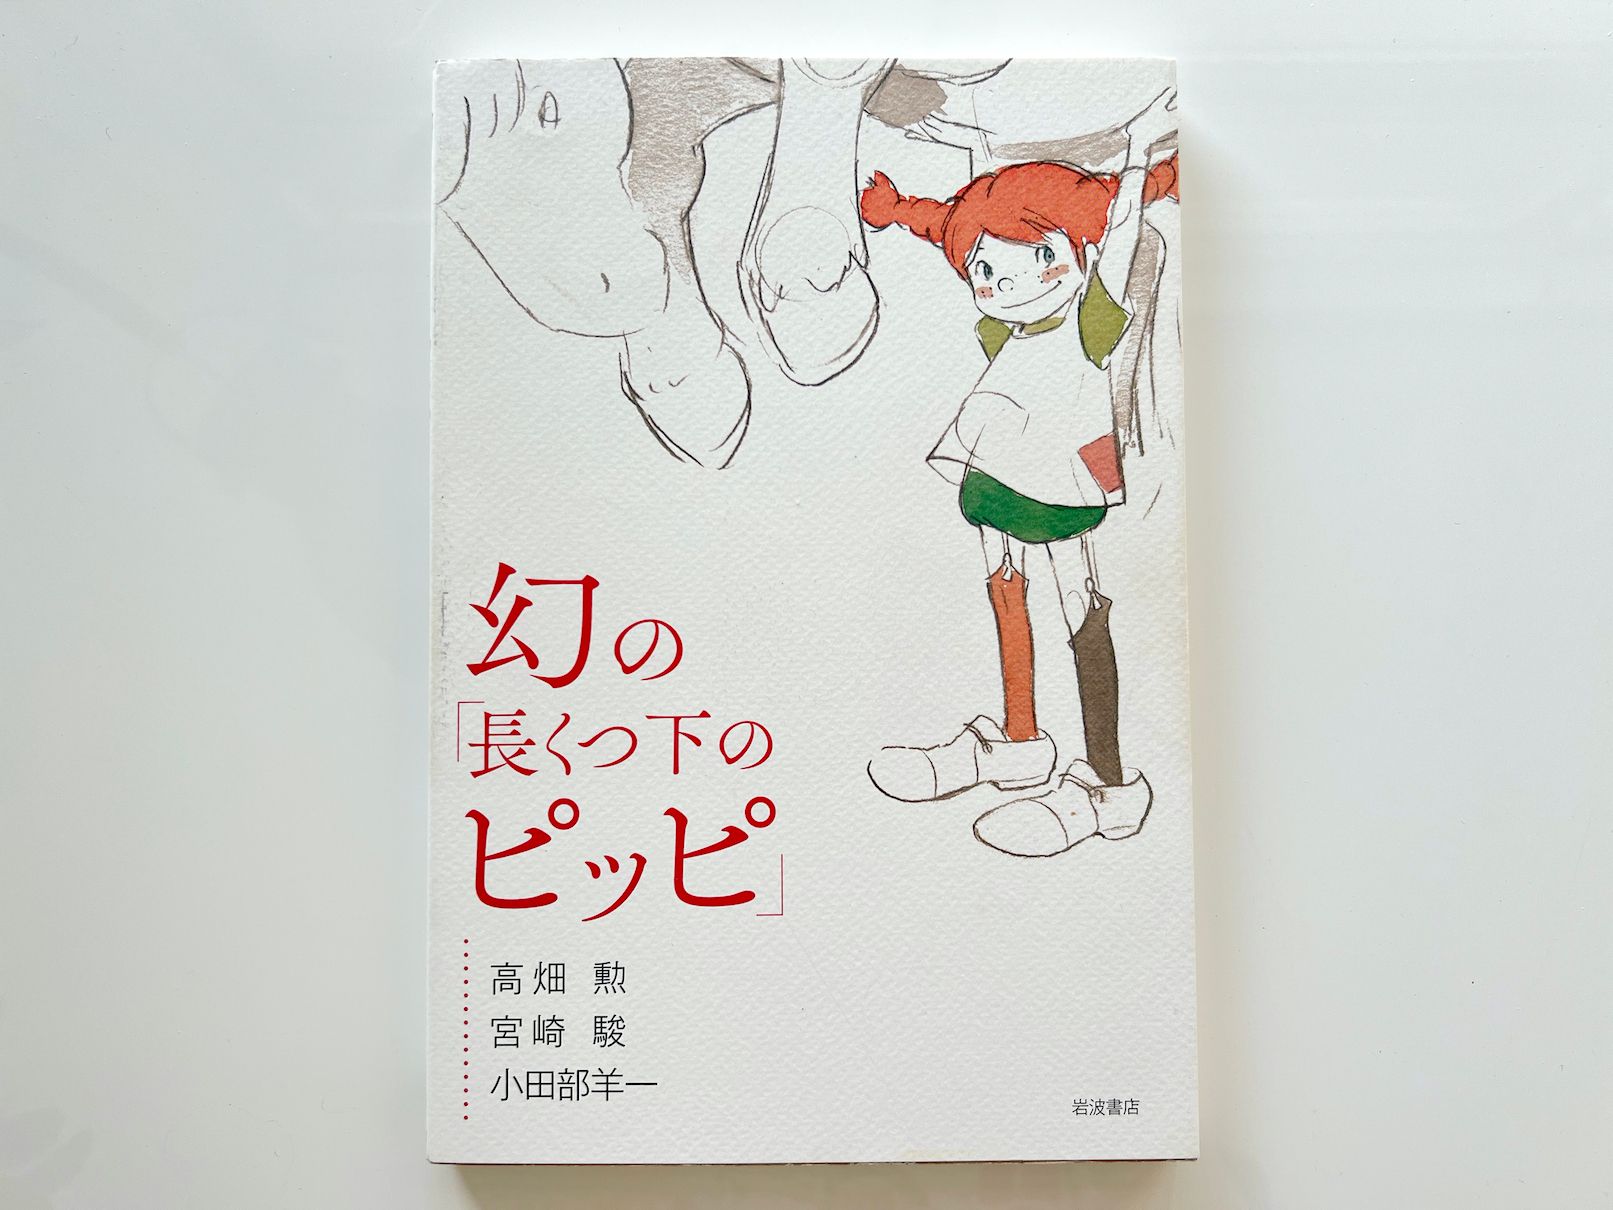 Studio Ghibli Anime Blu-ray Cover Designs II - Halcyon Realms